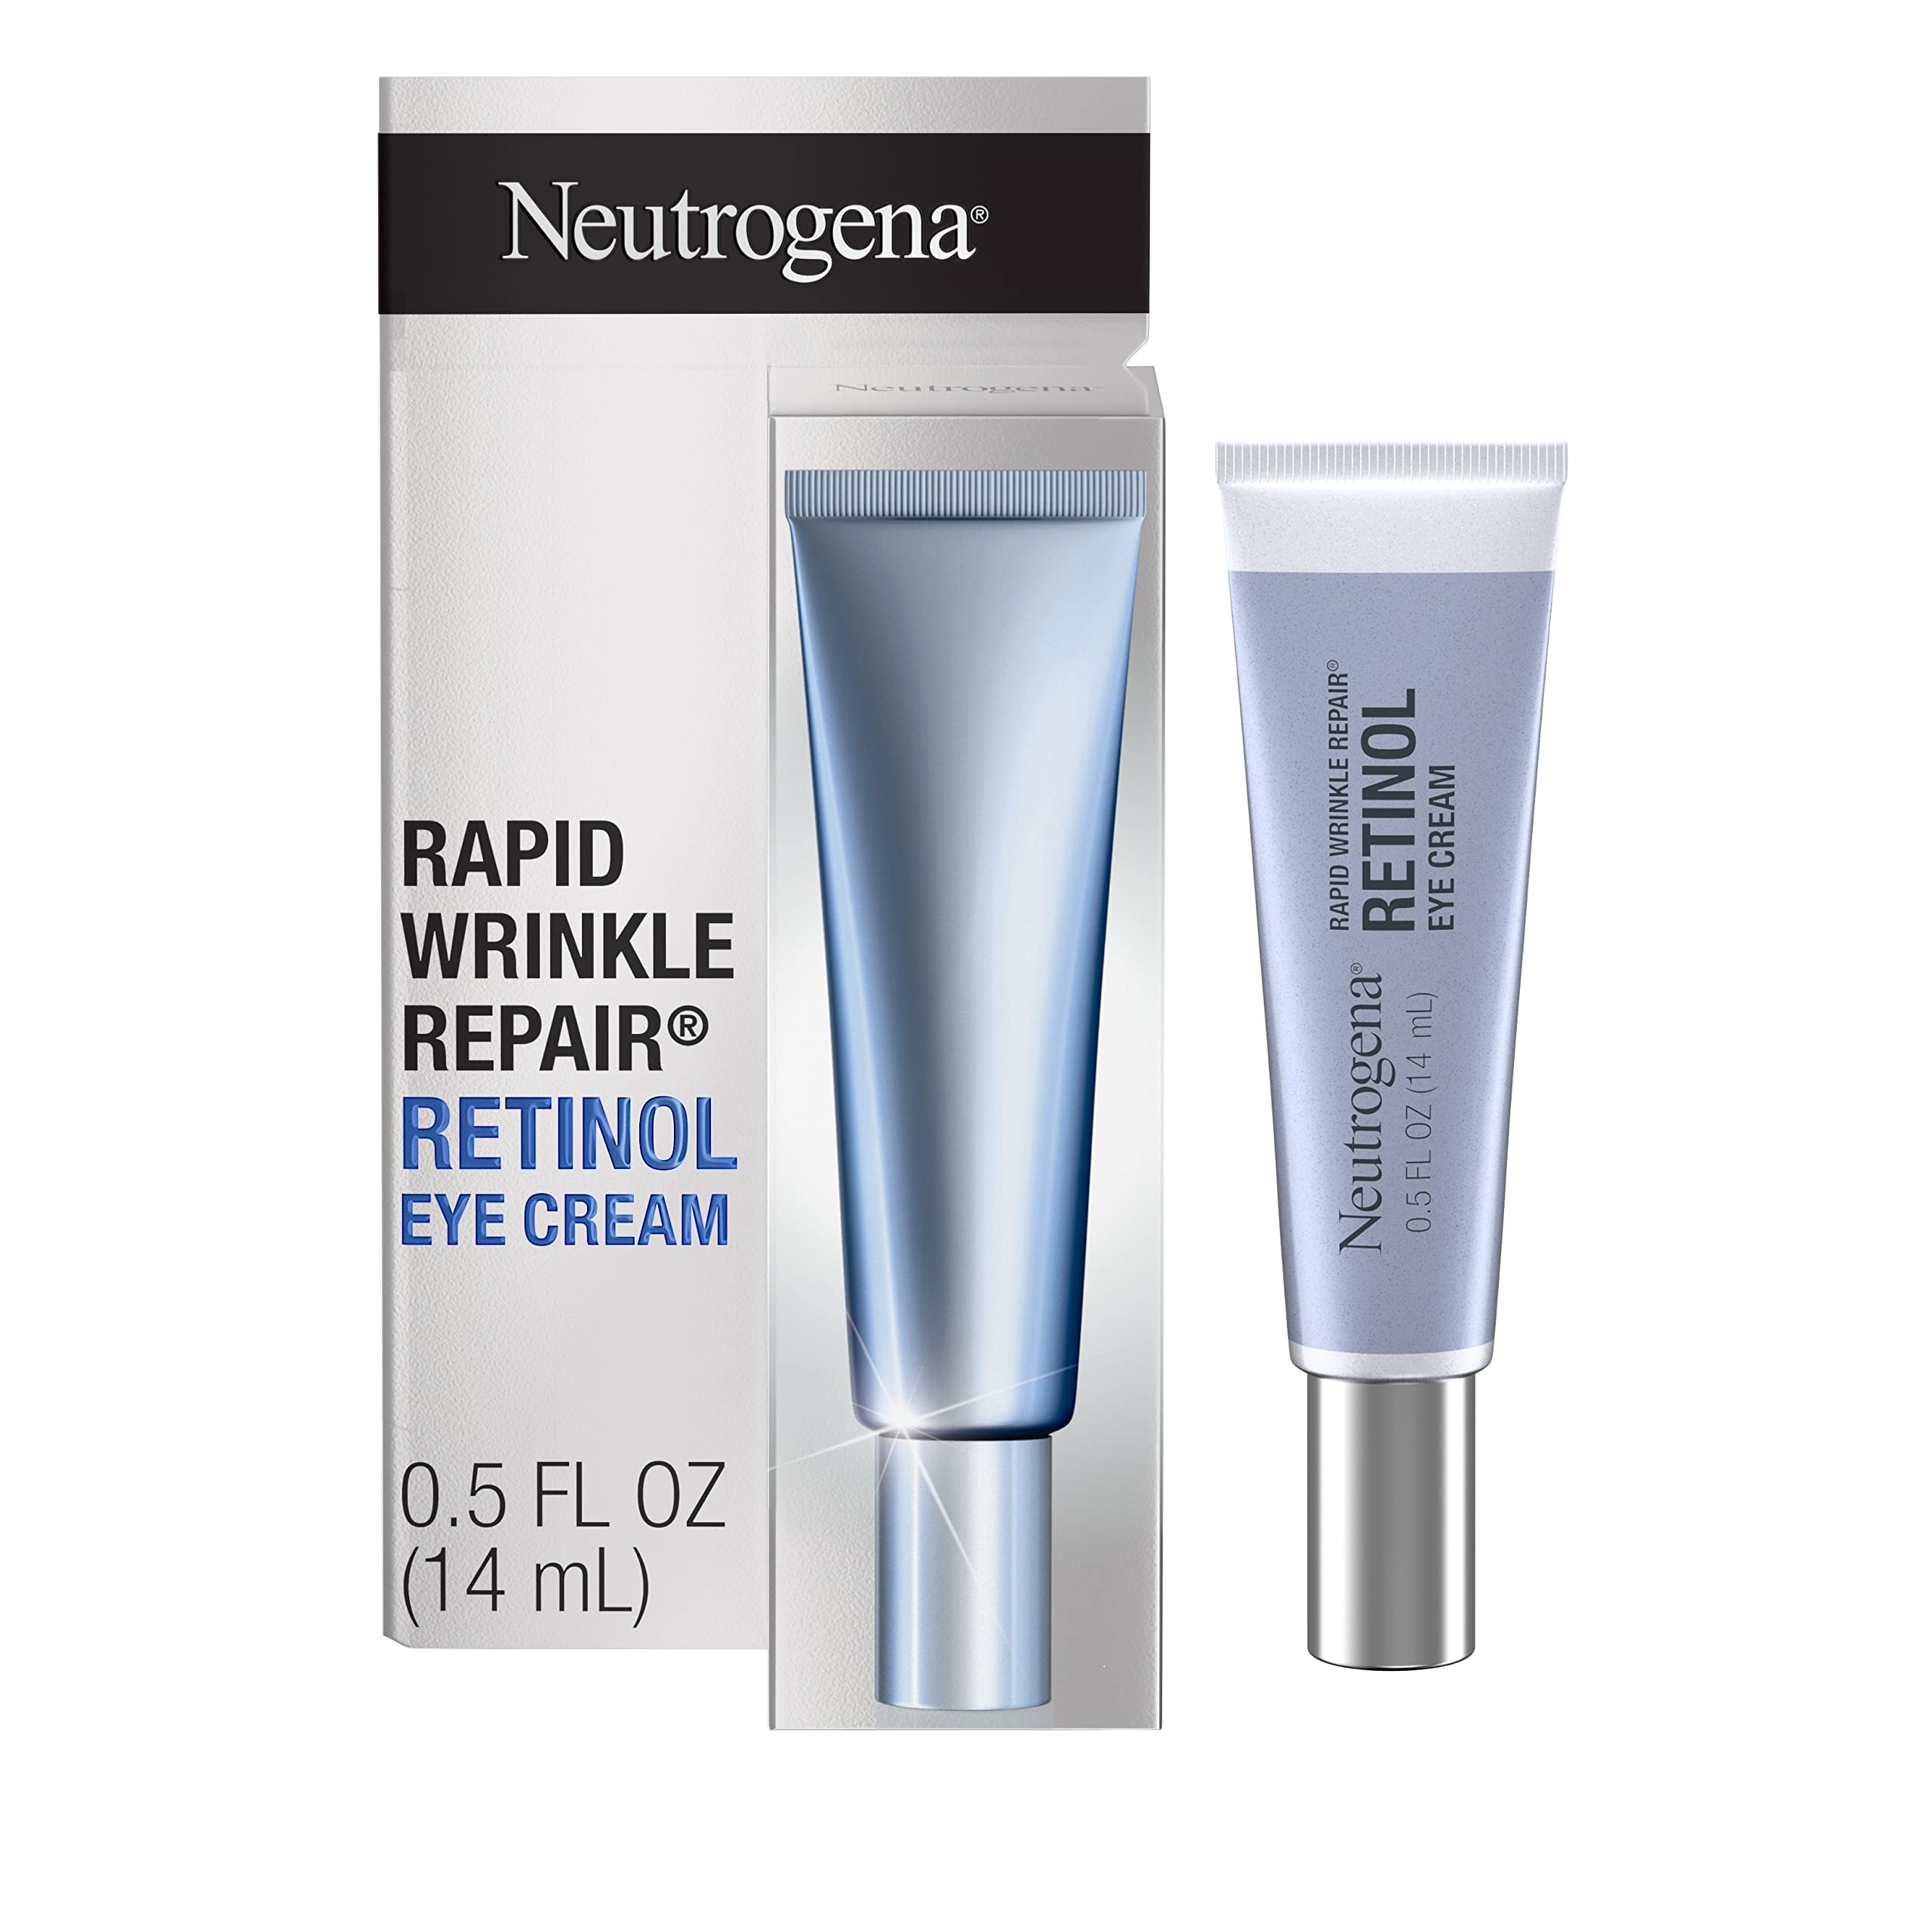 0.5-Oz Neutrogena Rapid Wrinkle Repair Retinol Daily Anti-Aging Eye Cream $12.97 w/ S&S + Free Shipping w/ Prime or on $35+